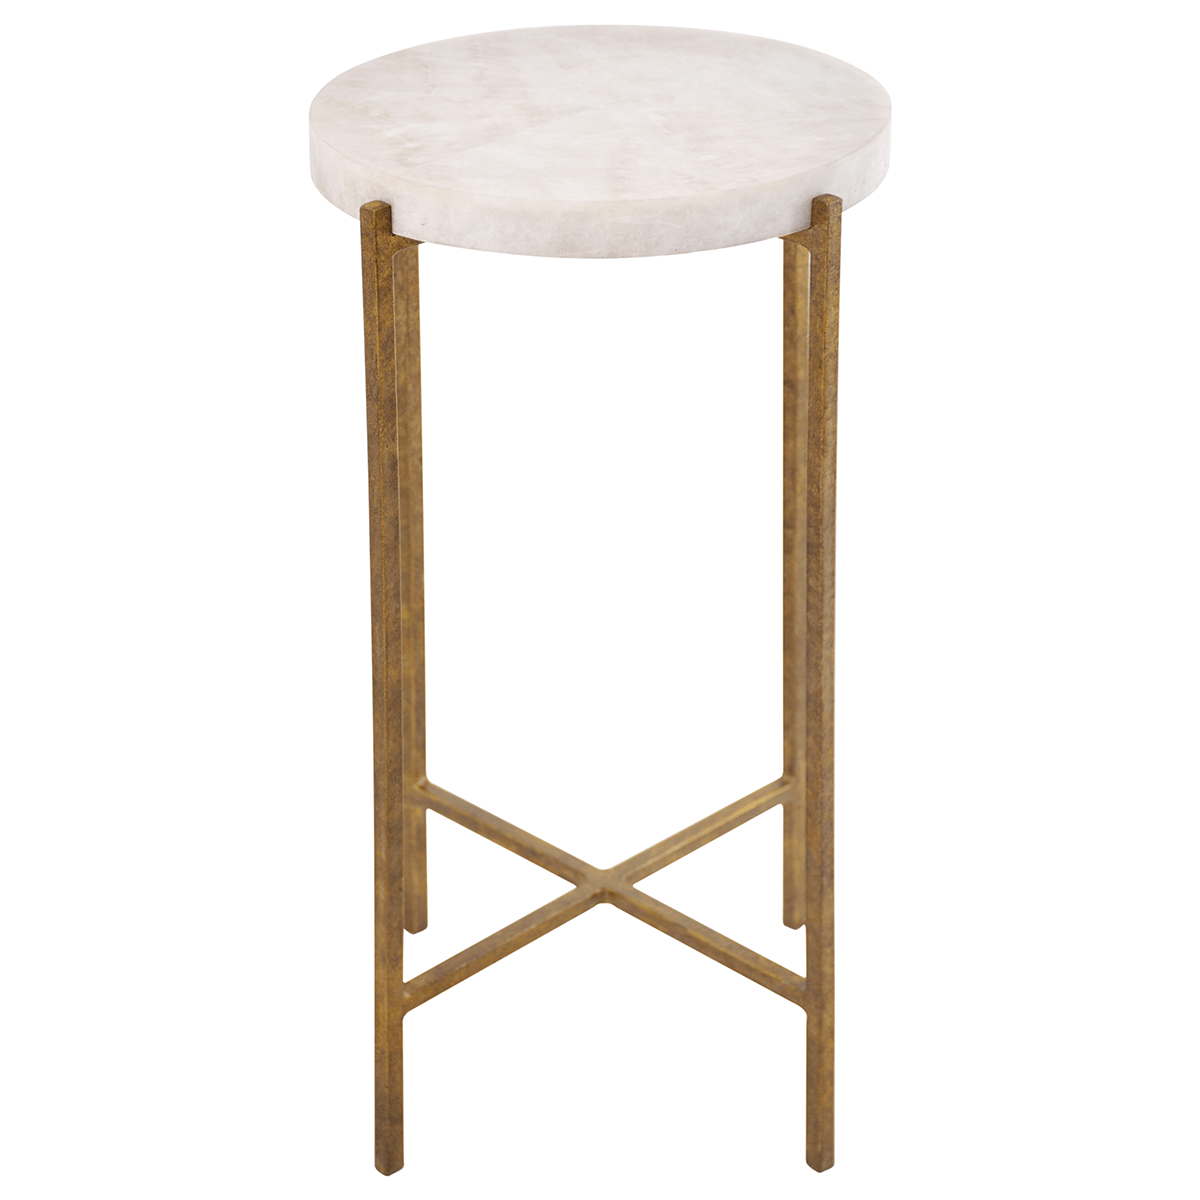 Oly Studio Agatha Round Side Table Furniture oly-agatha-round-side-table